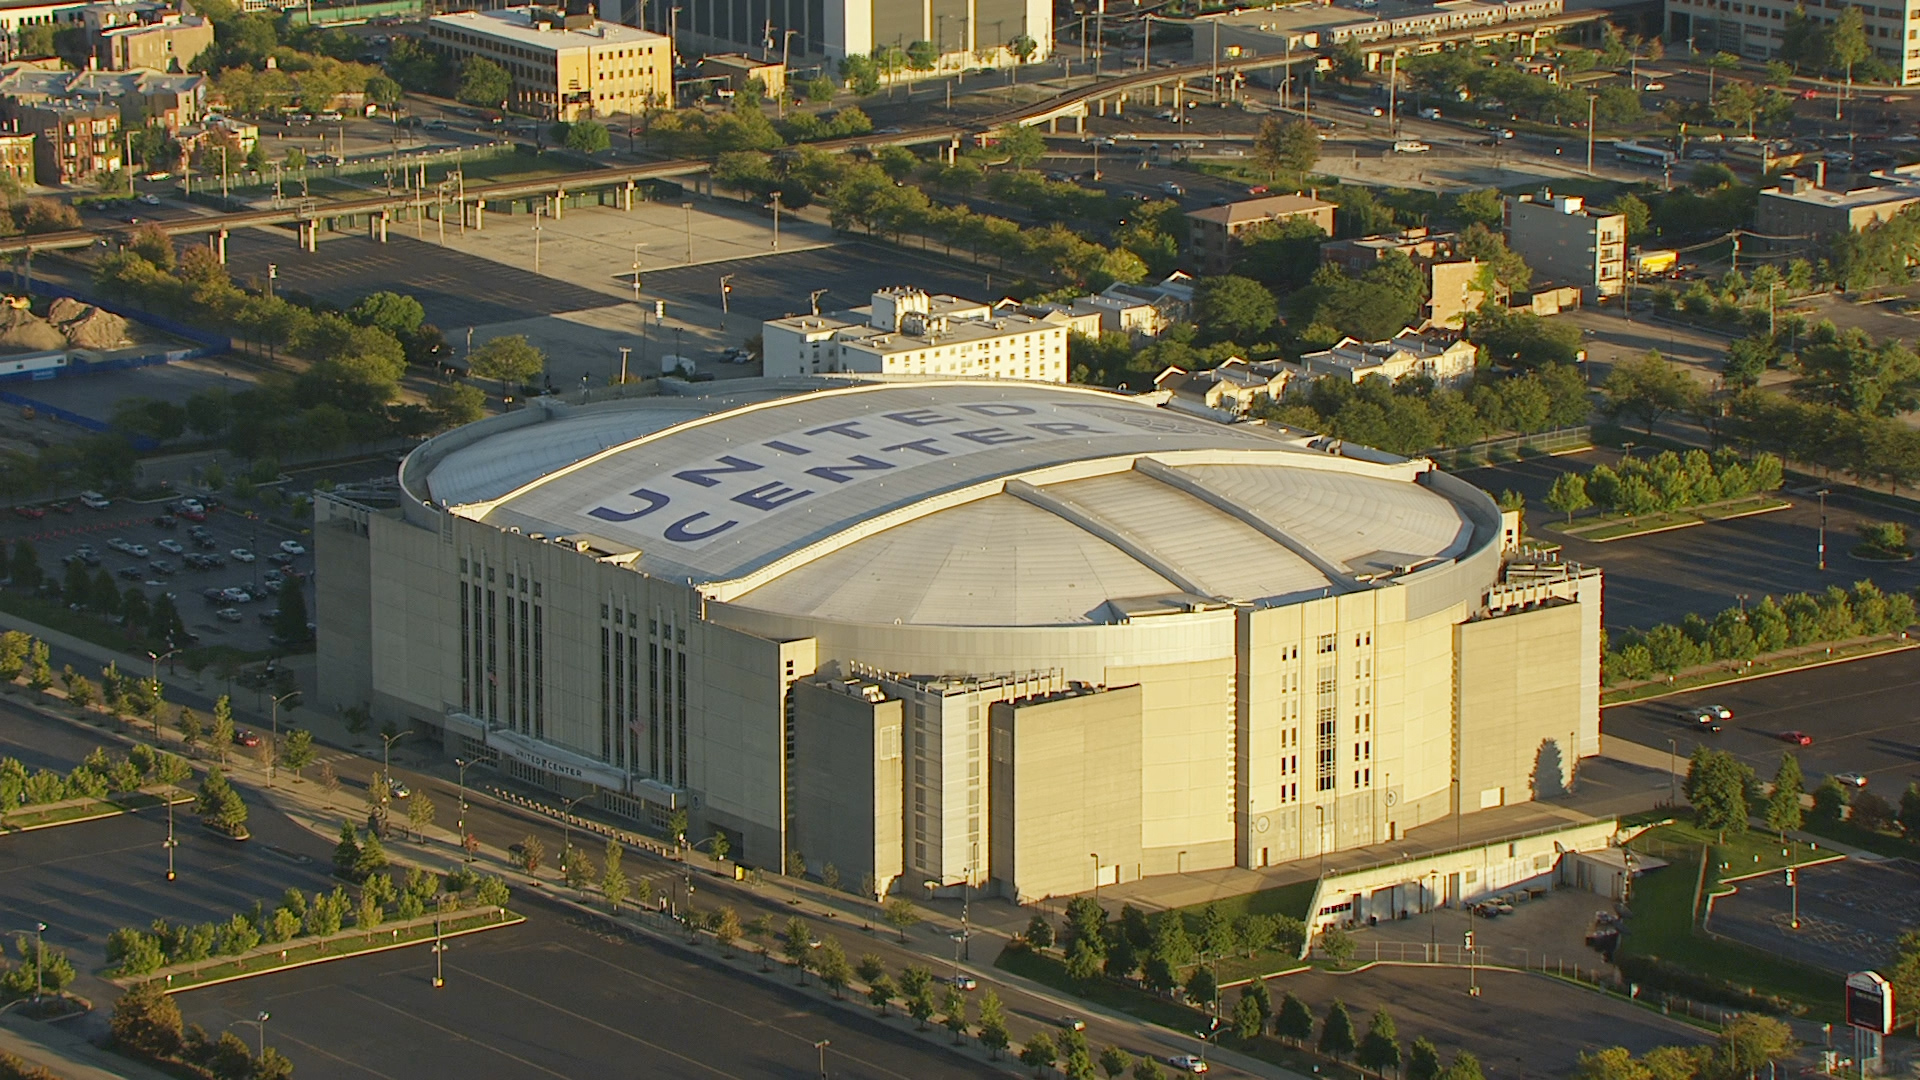 Free United Center Parking: Chicago Bulls Chicago Blackhawks Games